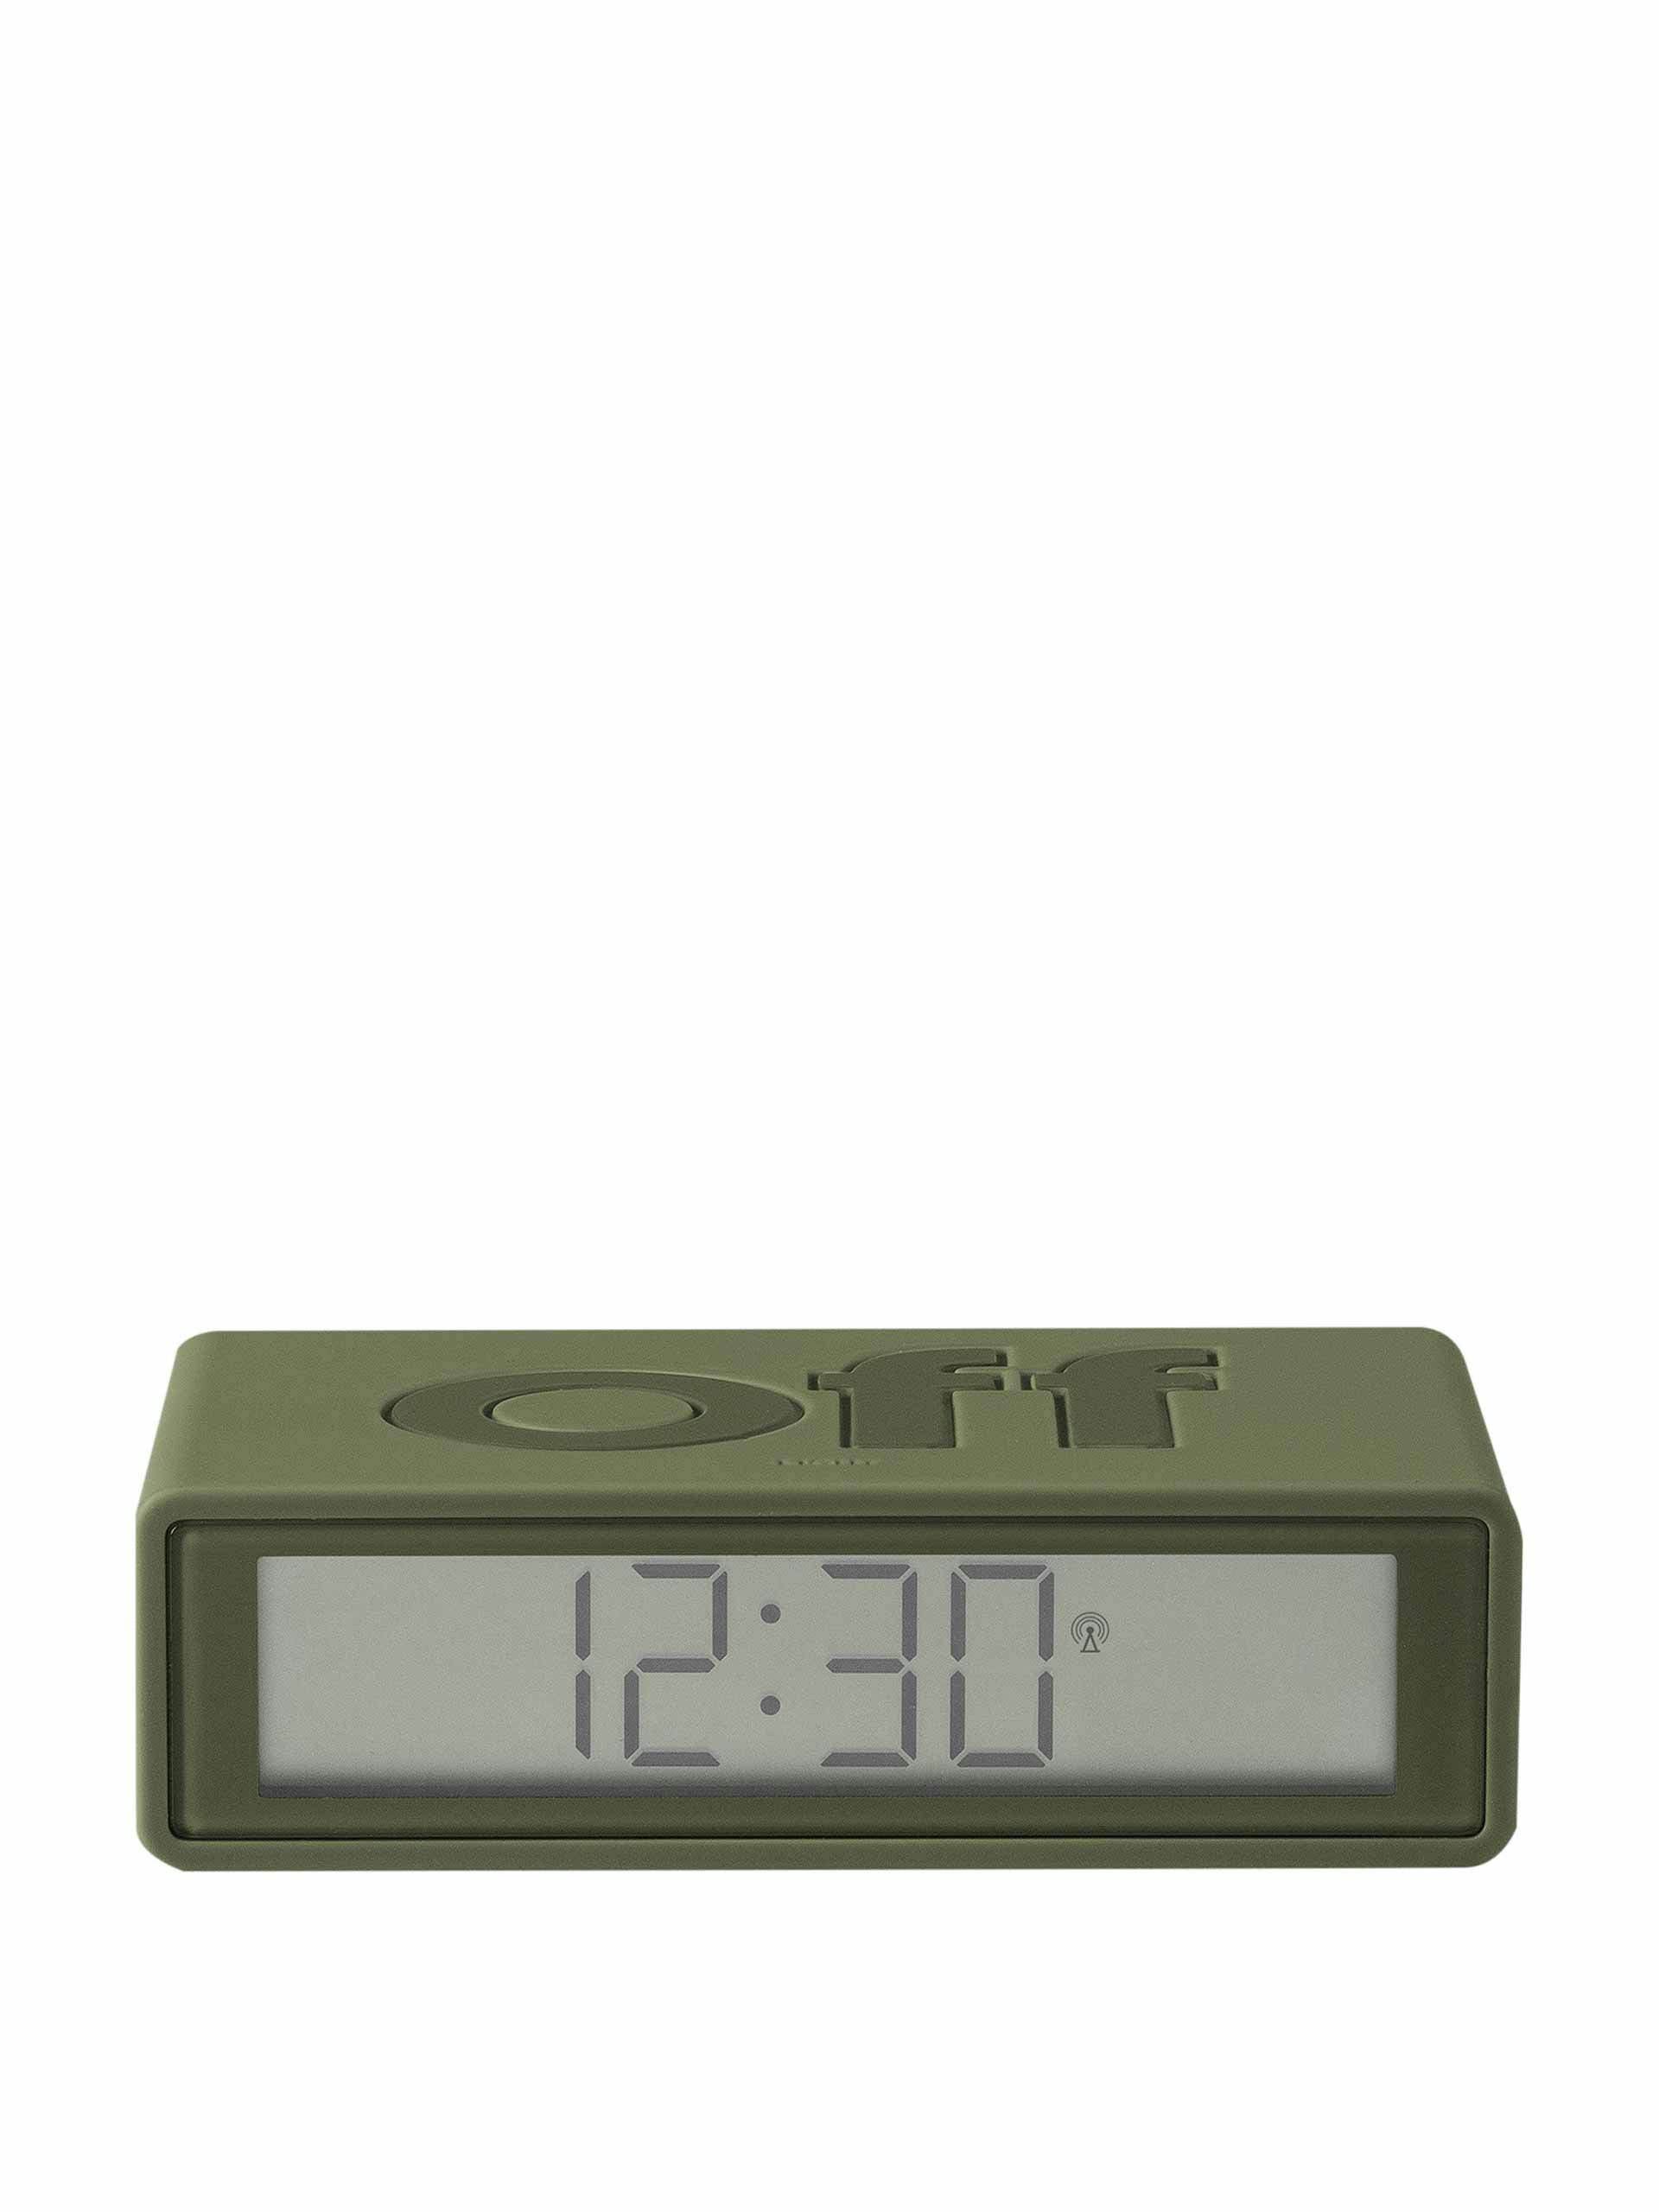 Flip+ alarm clock